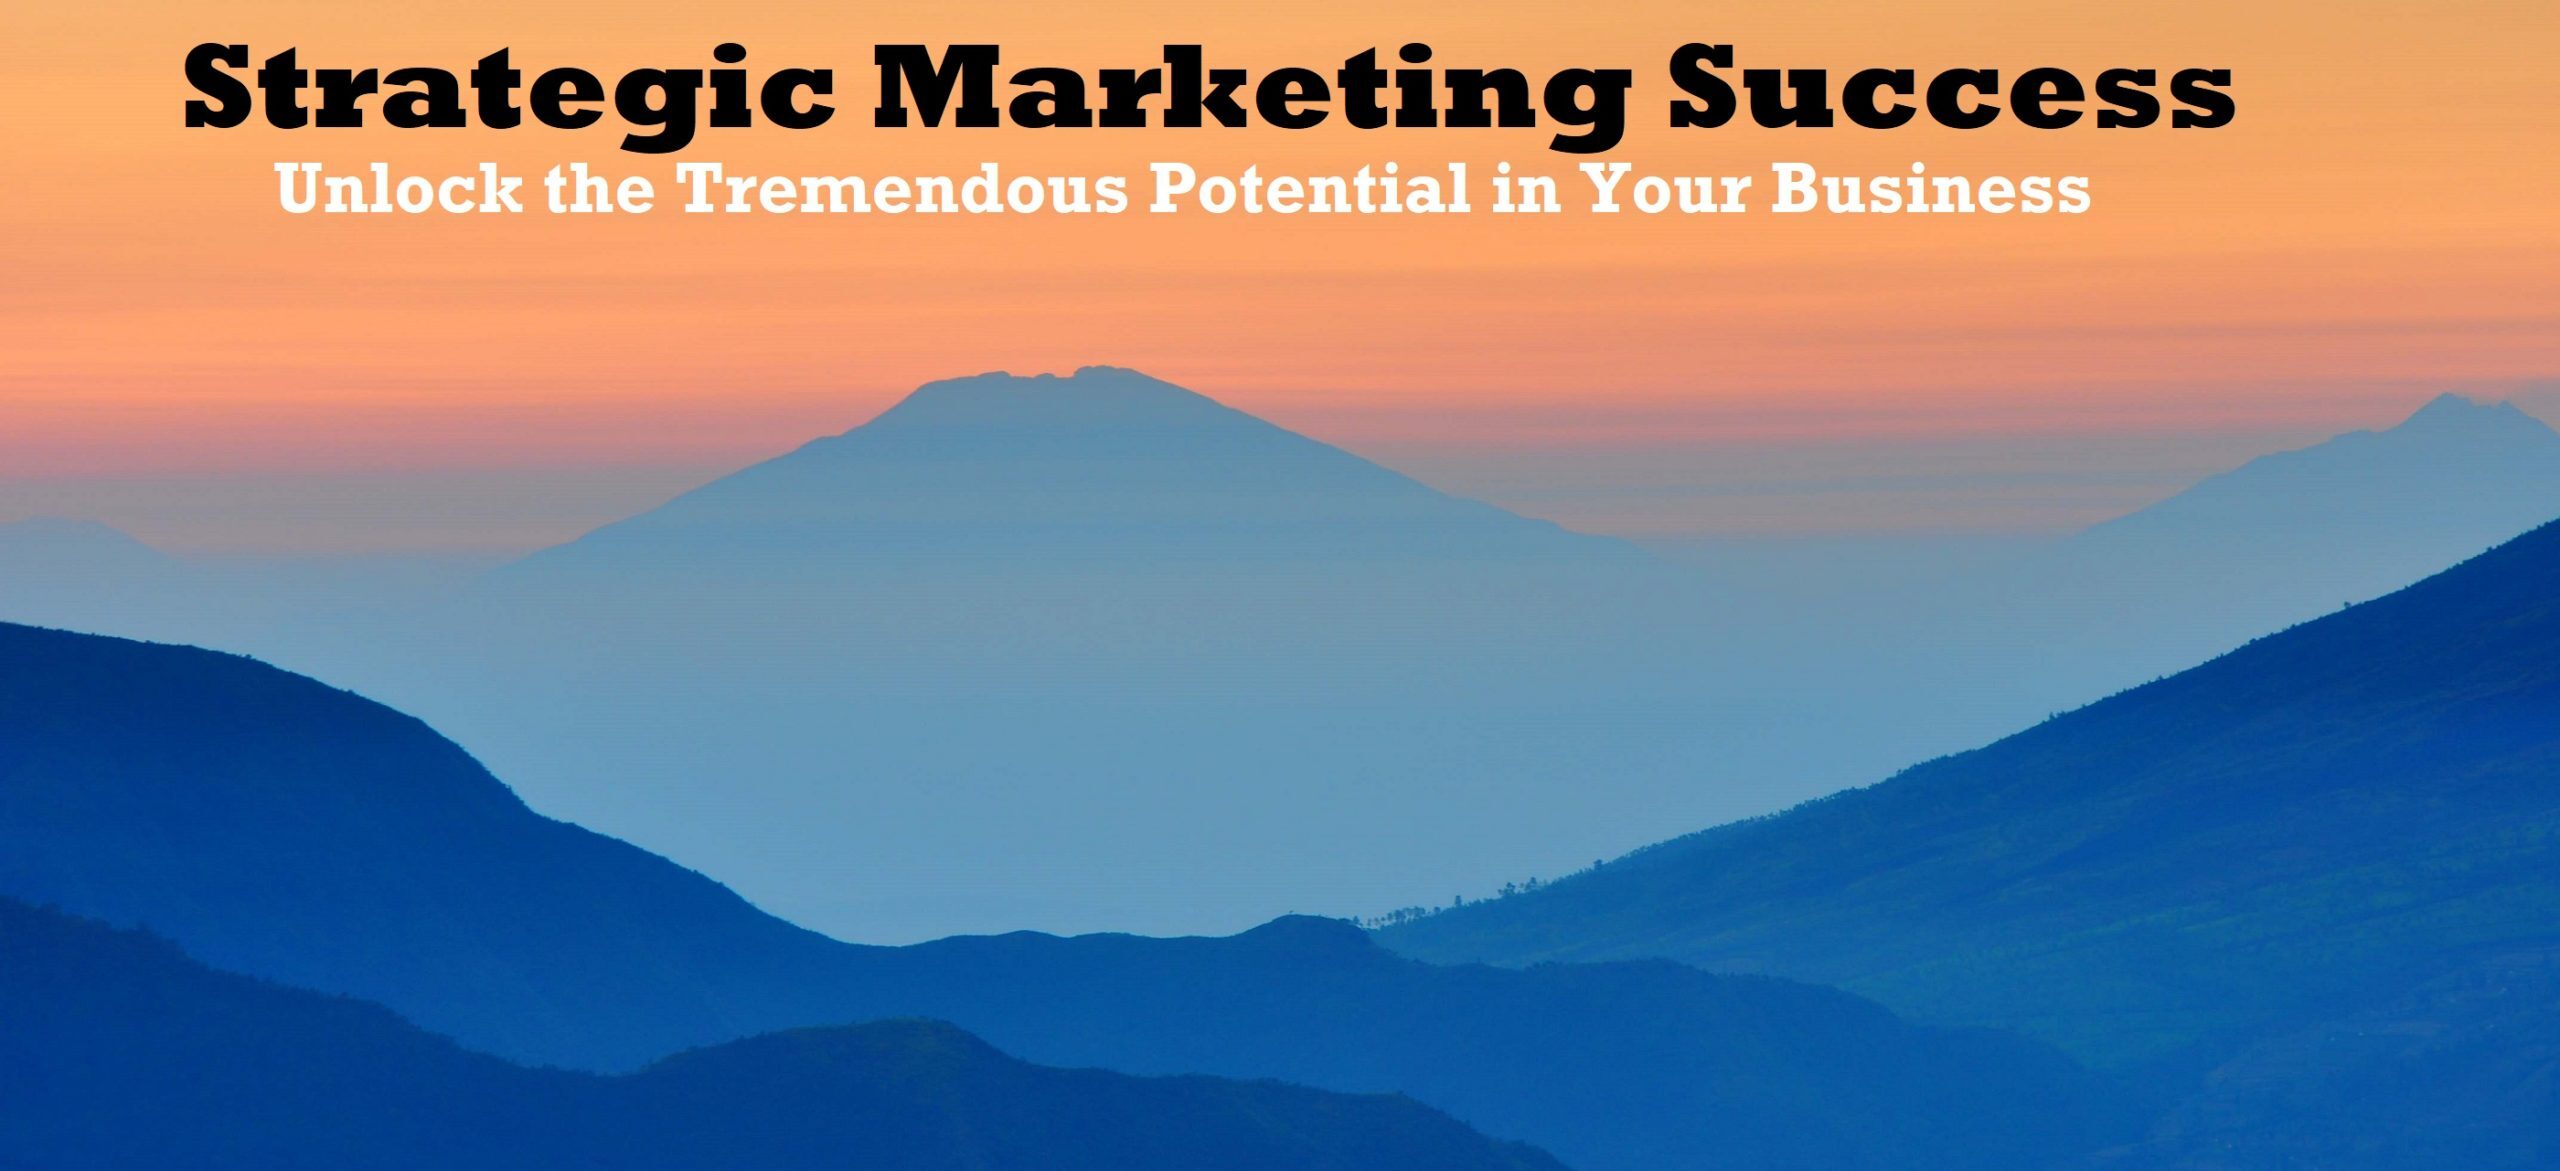 strategic marketing success with IMJustice Marketing